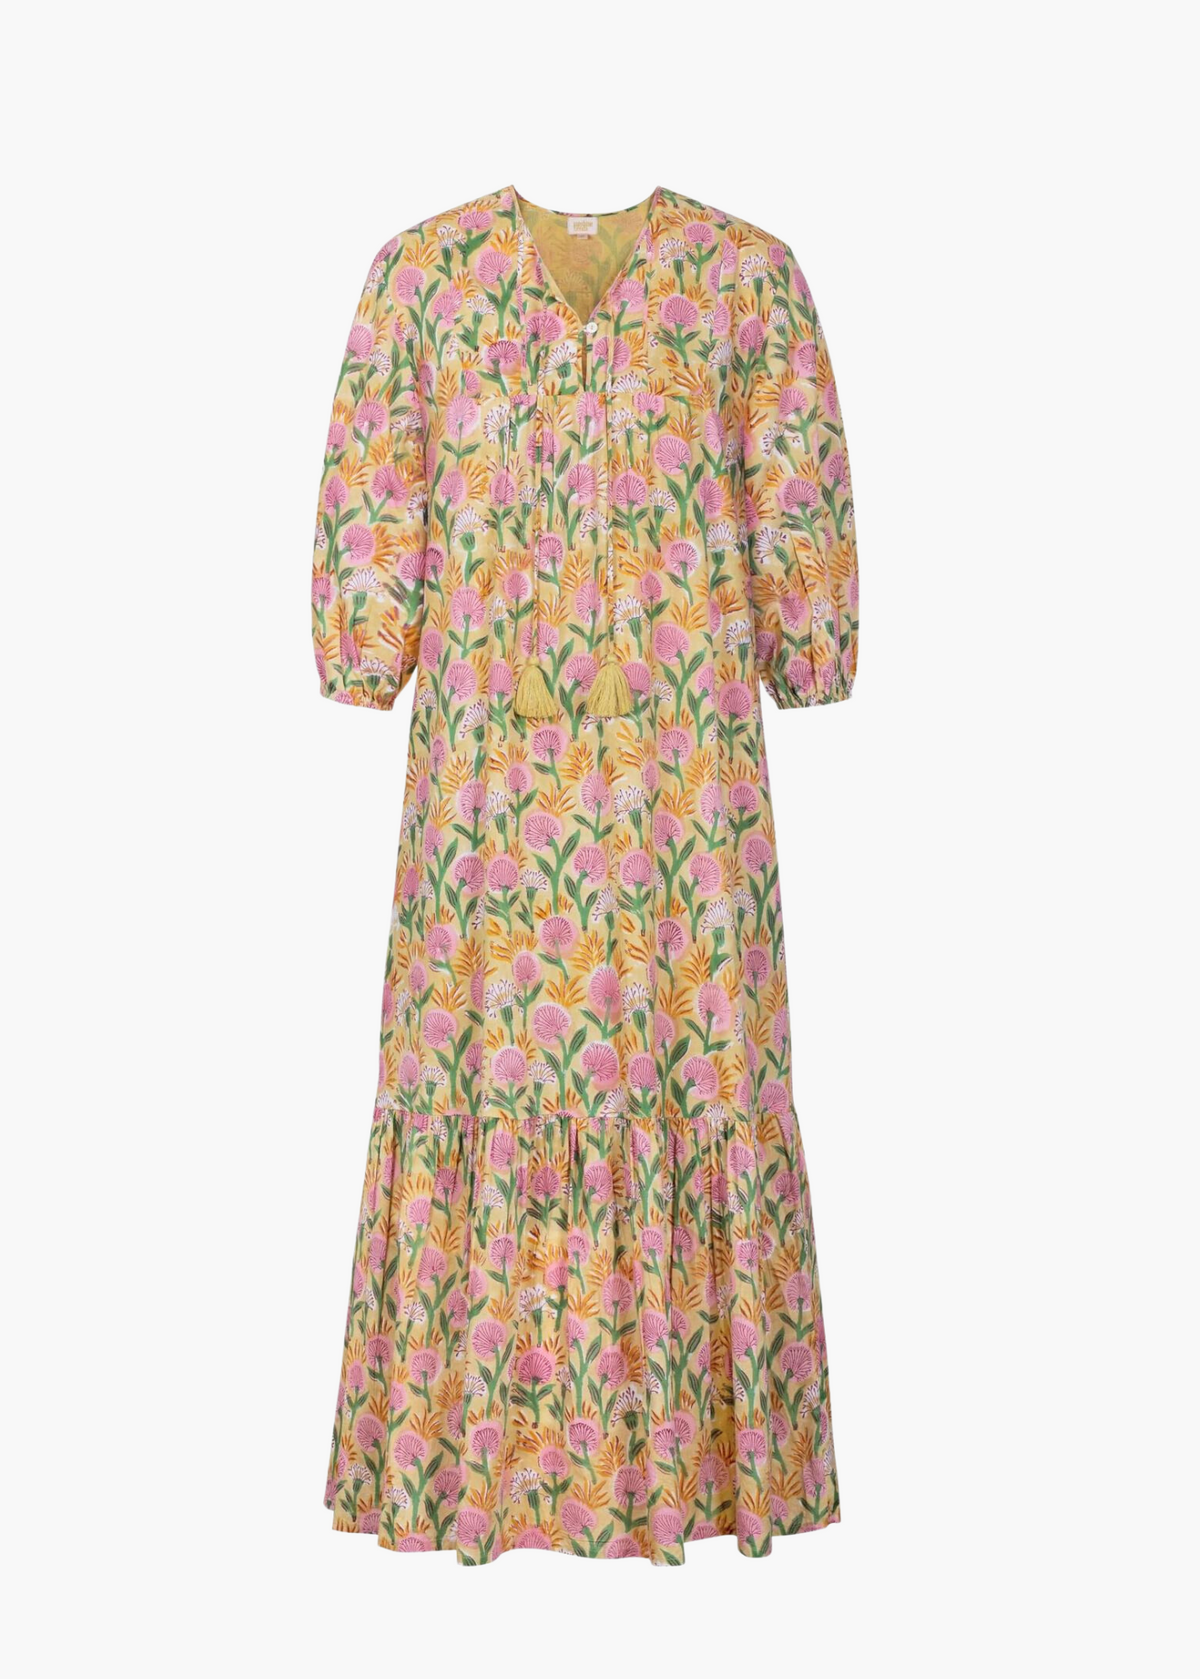 Fall Marigold Copa Dress